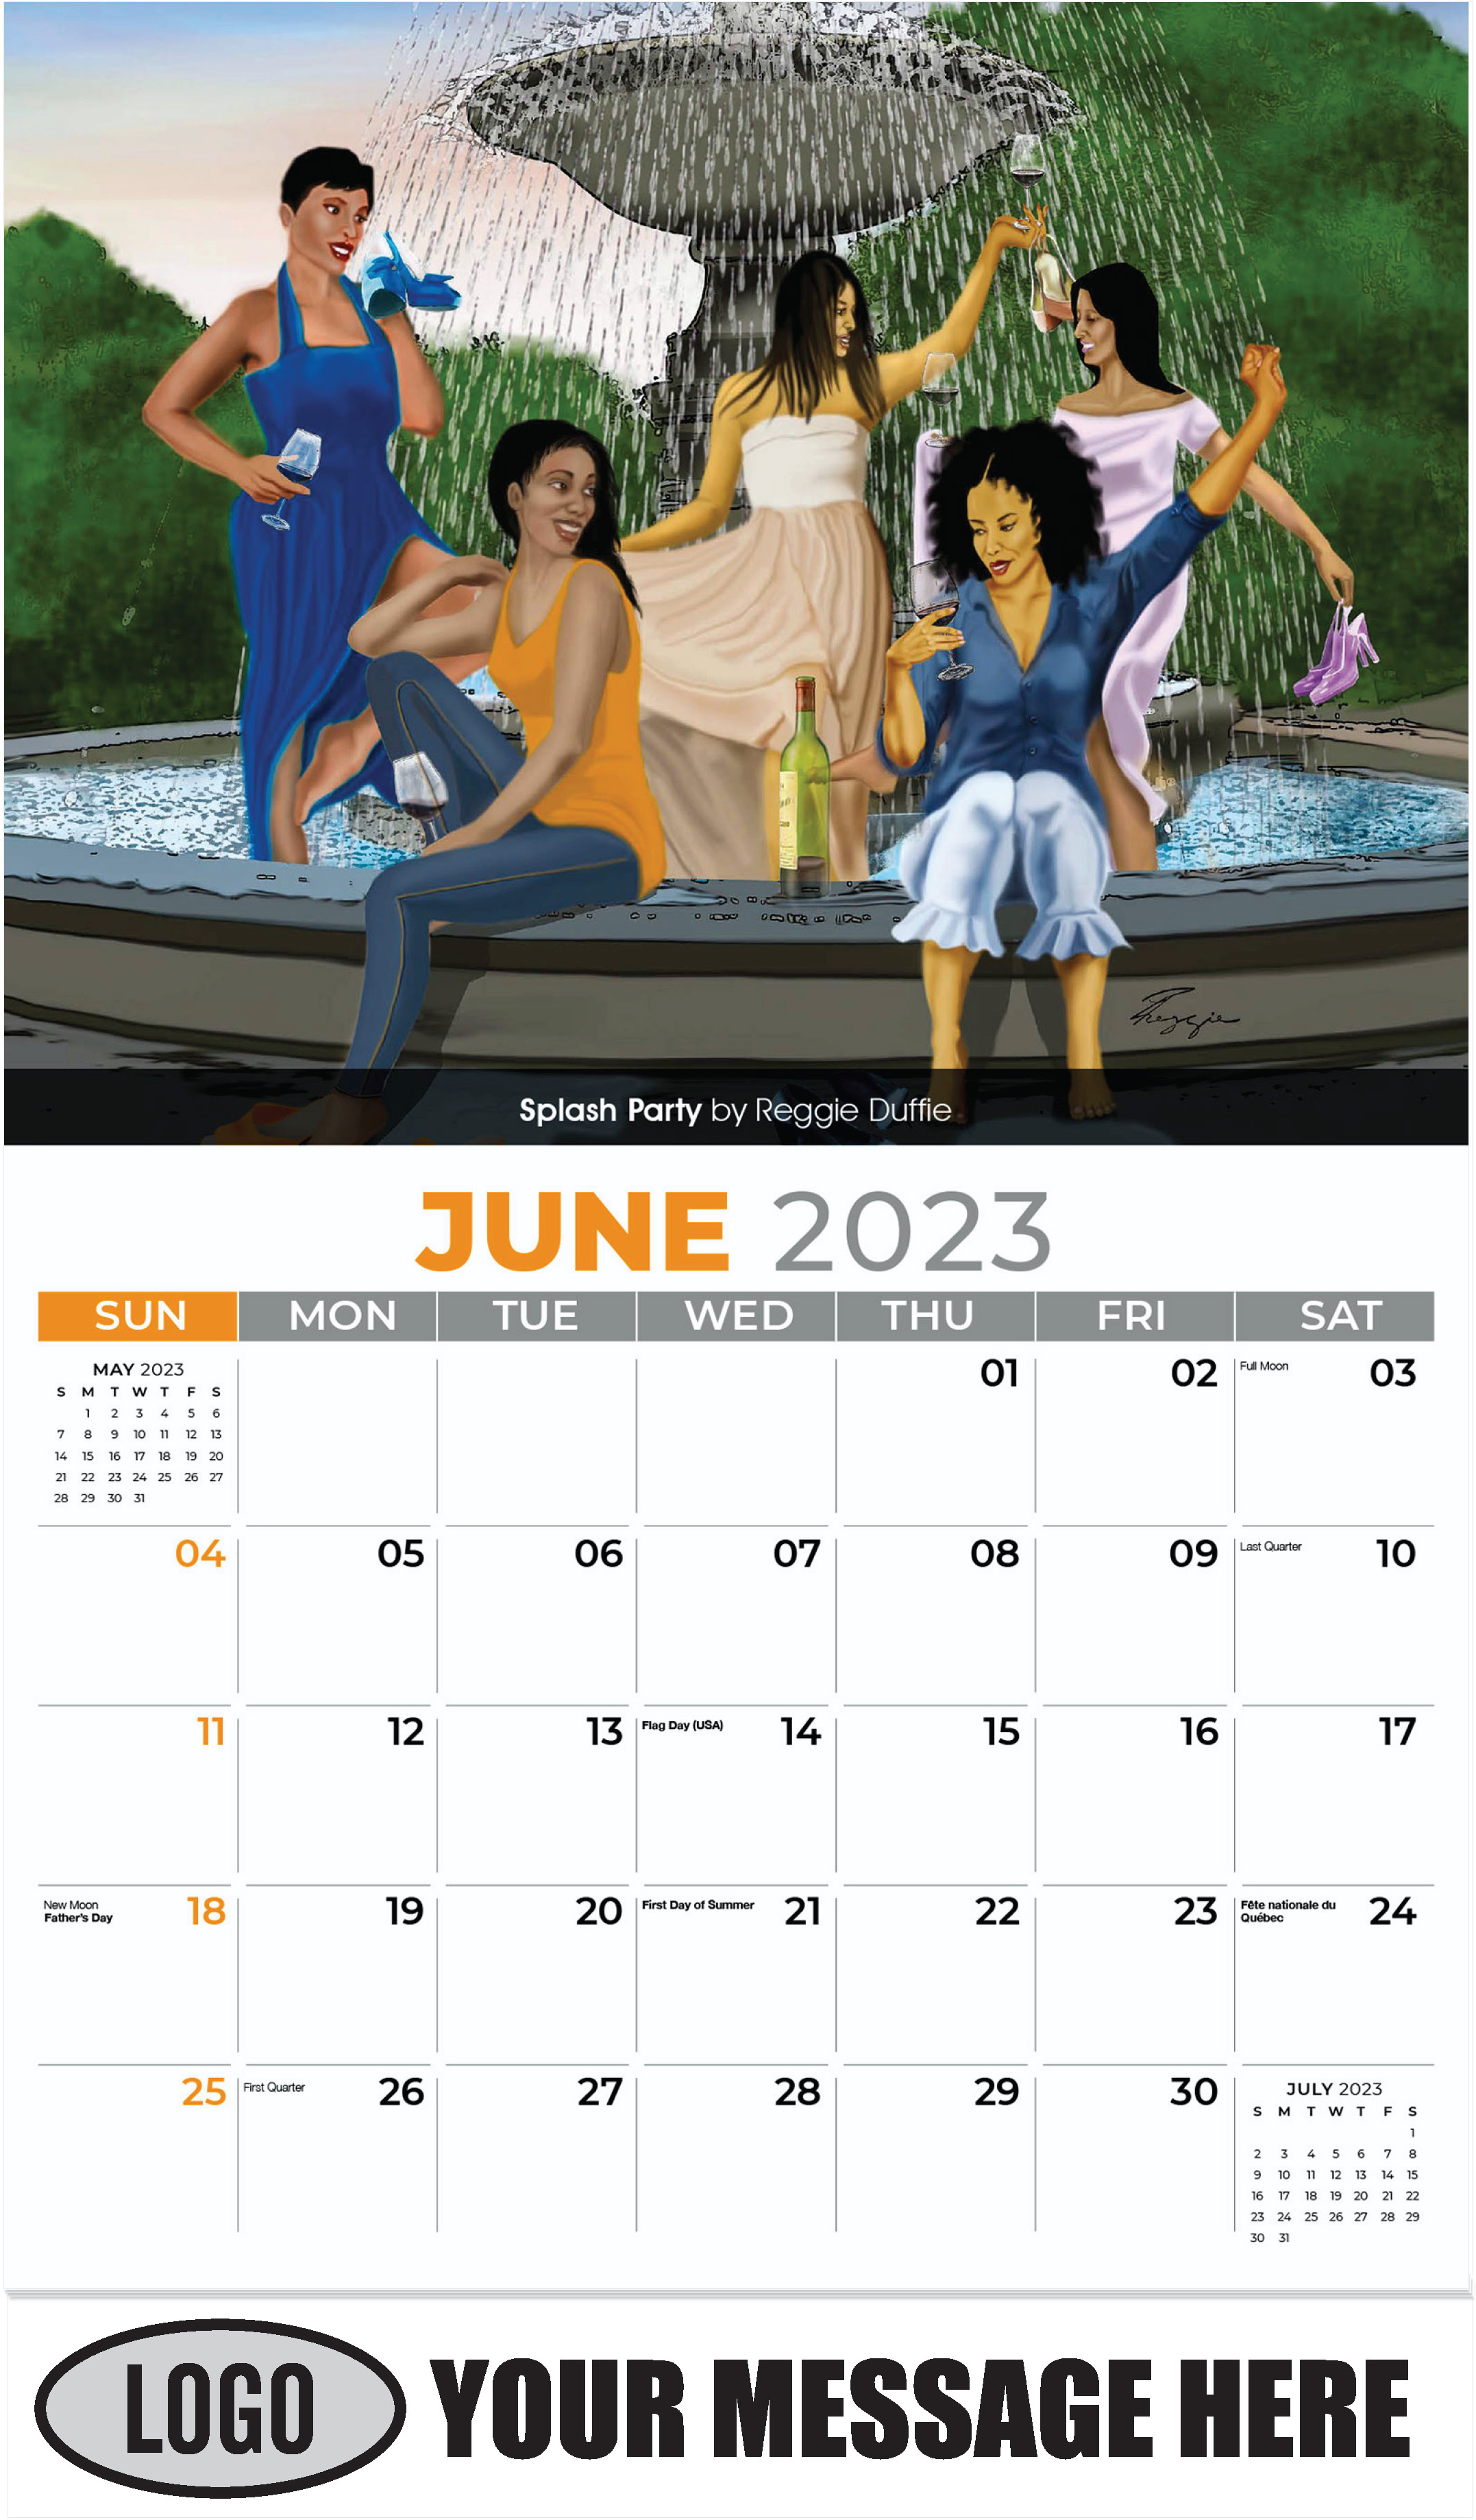 Splash Party by Reggie Duffie - June - Celebration of African American Art 2023 Promotional Calendar